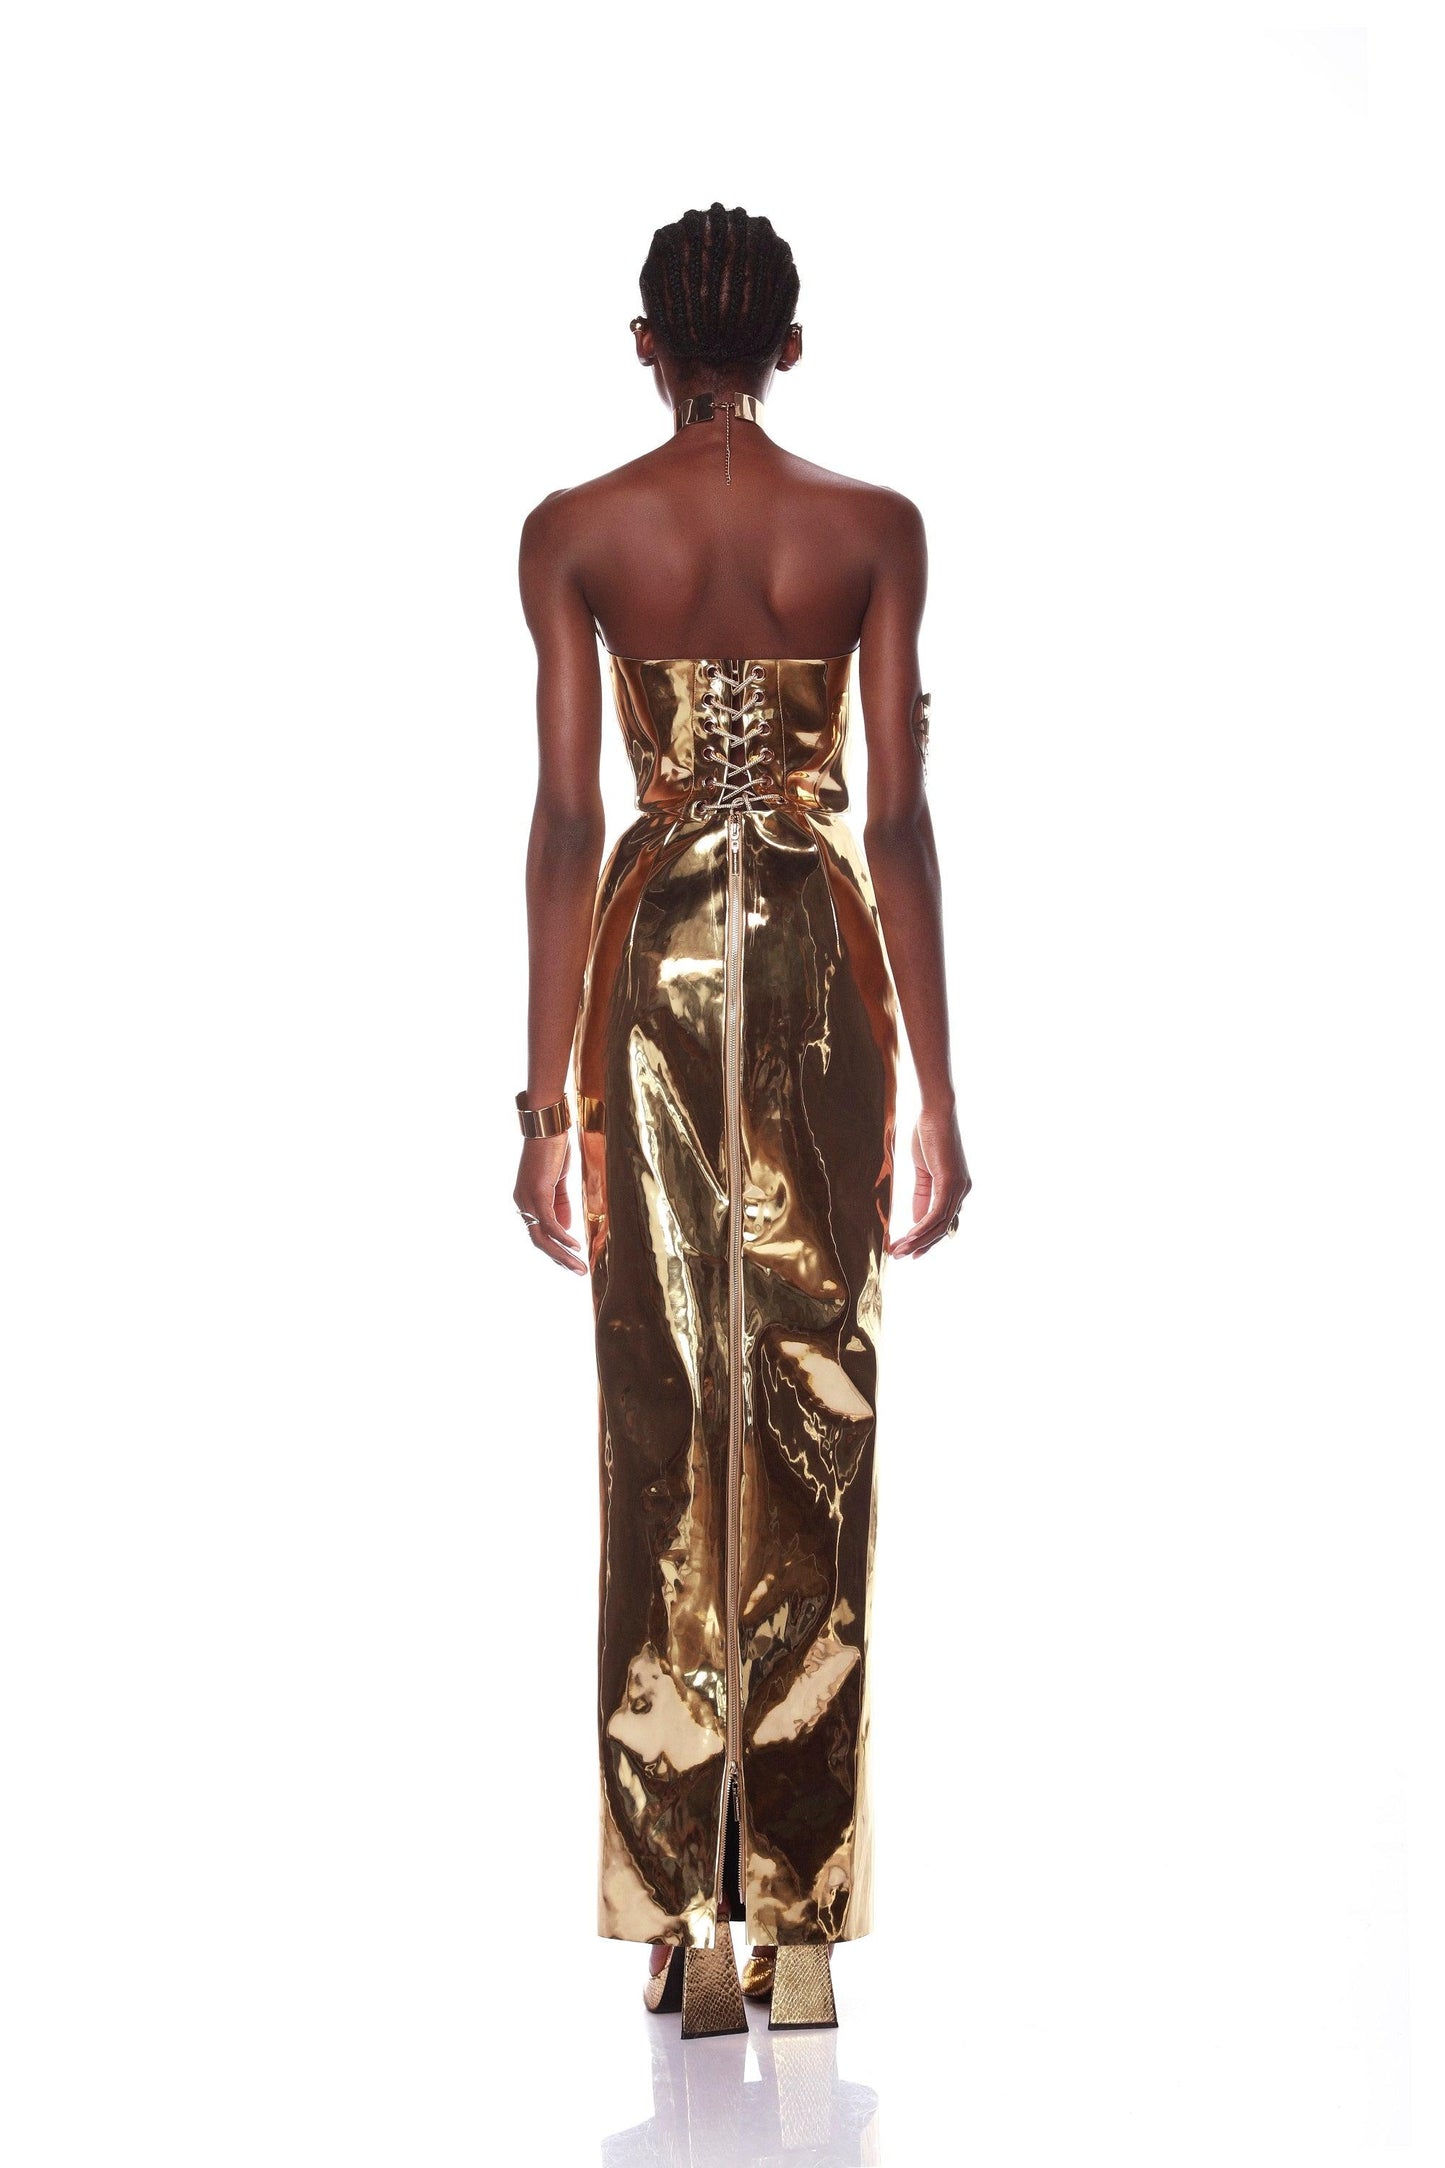 Stallion Gold Maxi Dress - Pre Order